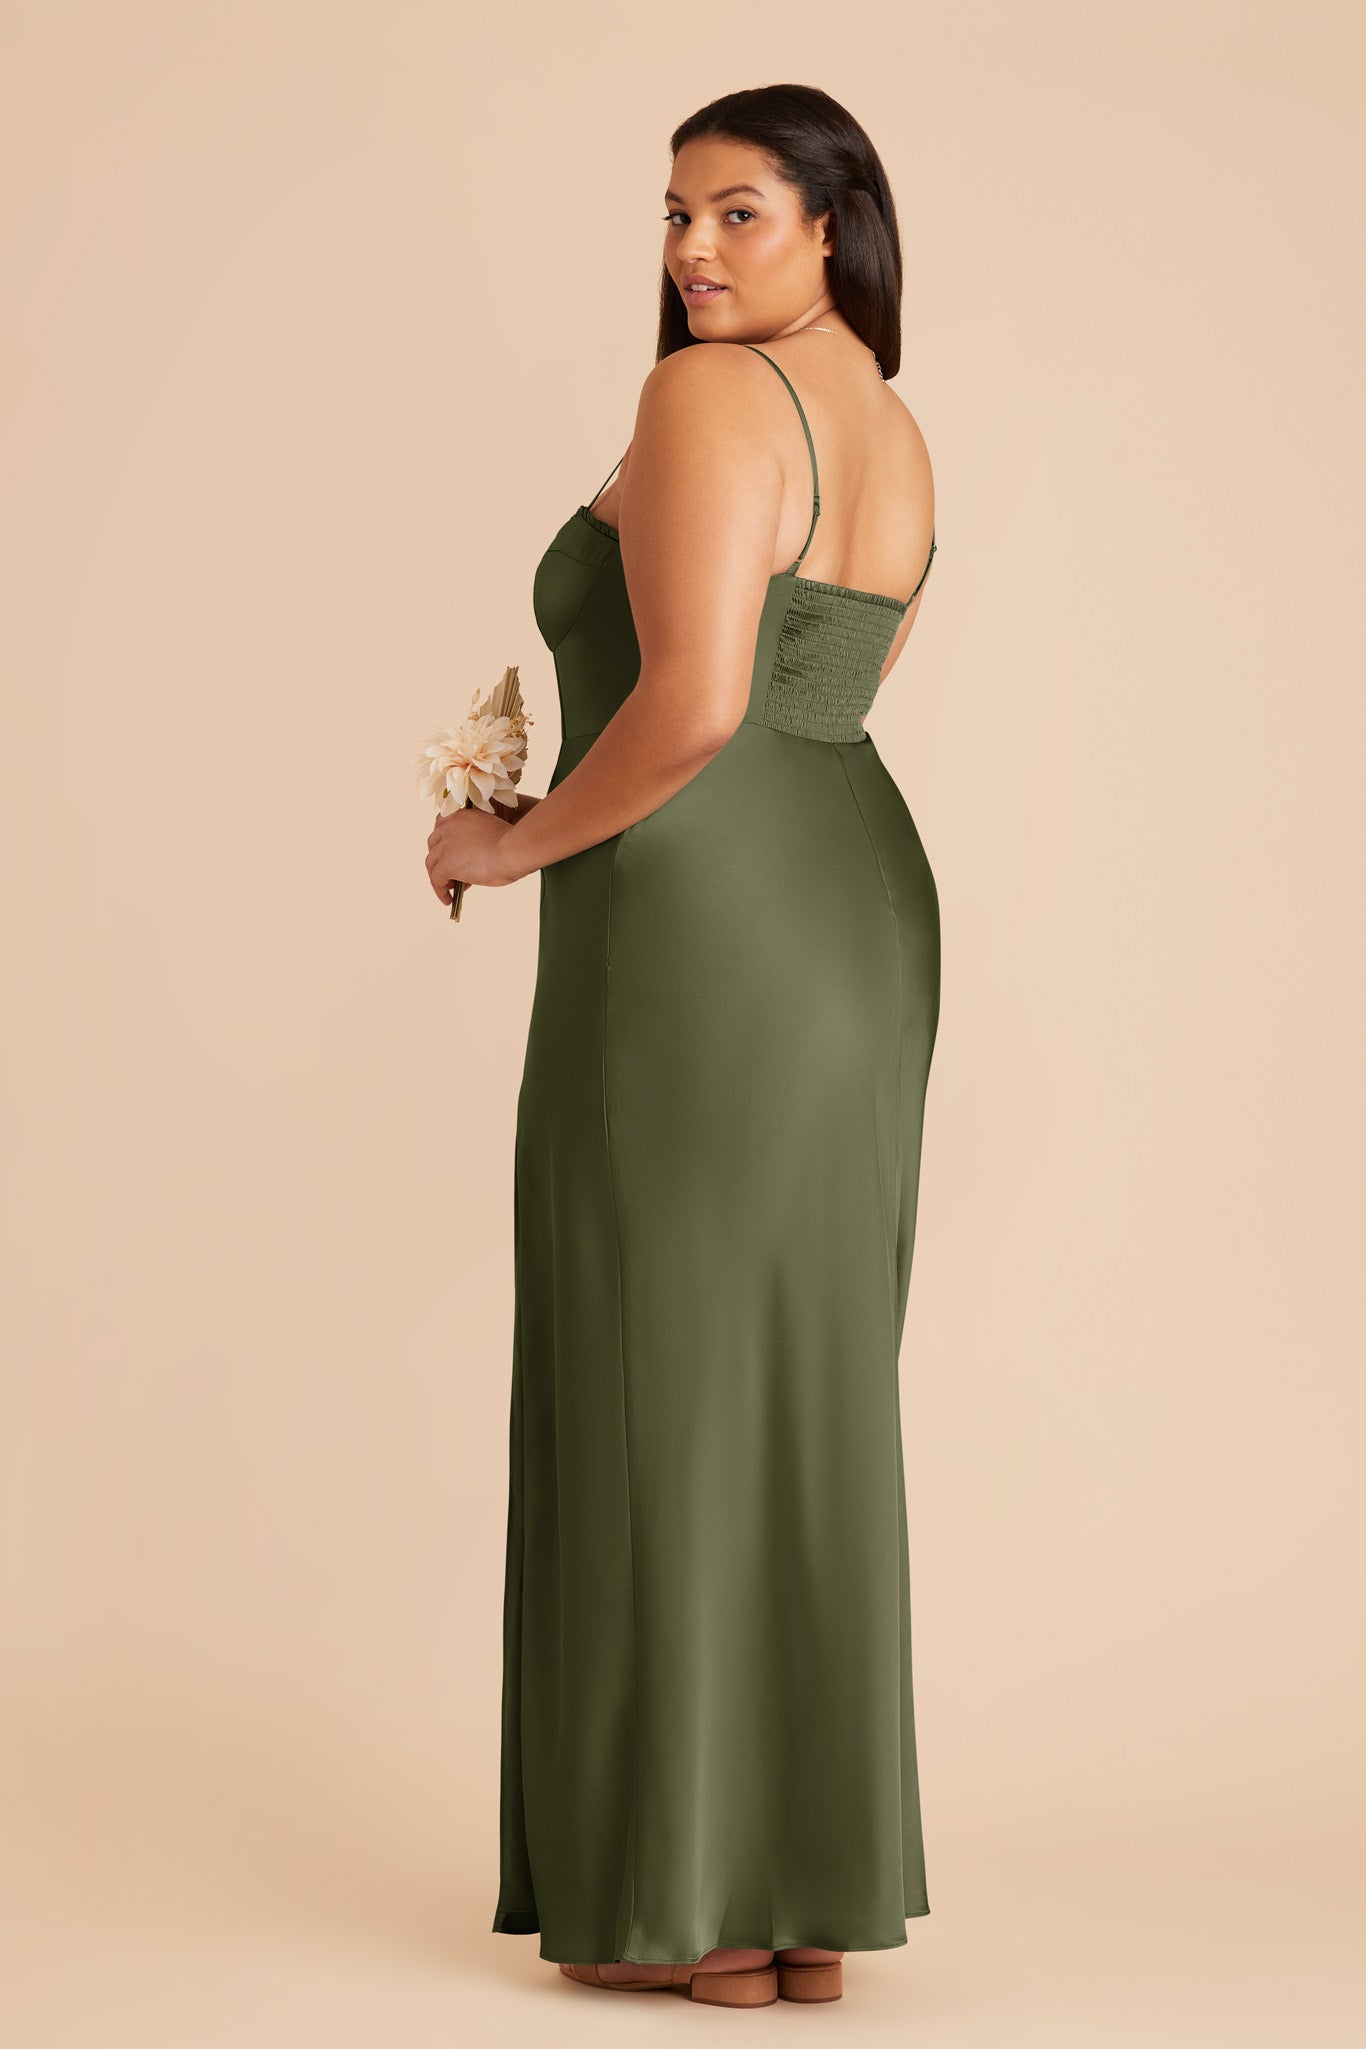 Olive Jessica Matte Satin Dress by Birdy Grey